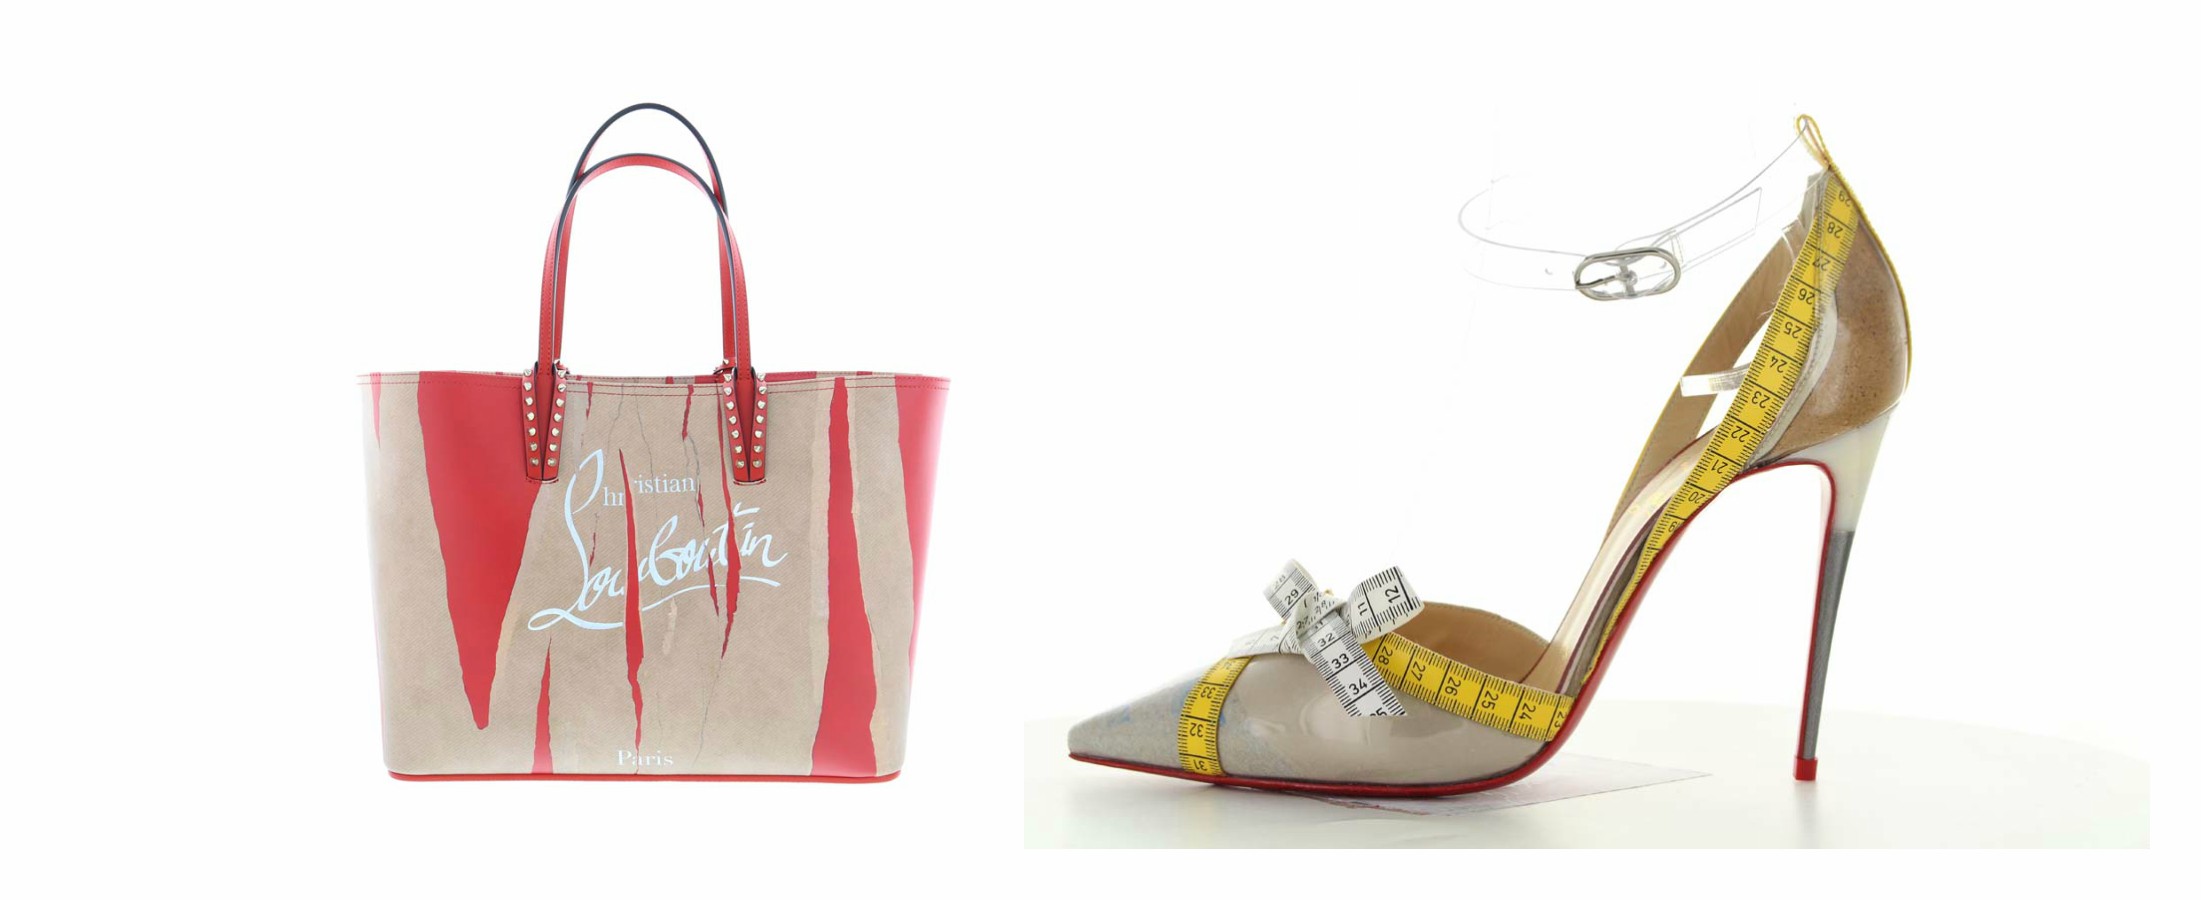 Christian Louboutin украсили туфли и сумки картоном и портновским сантиметром